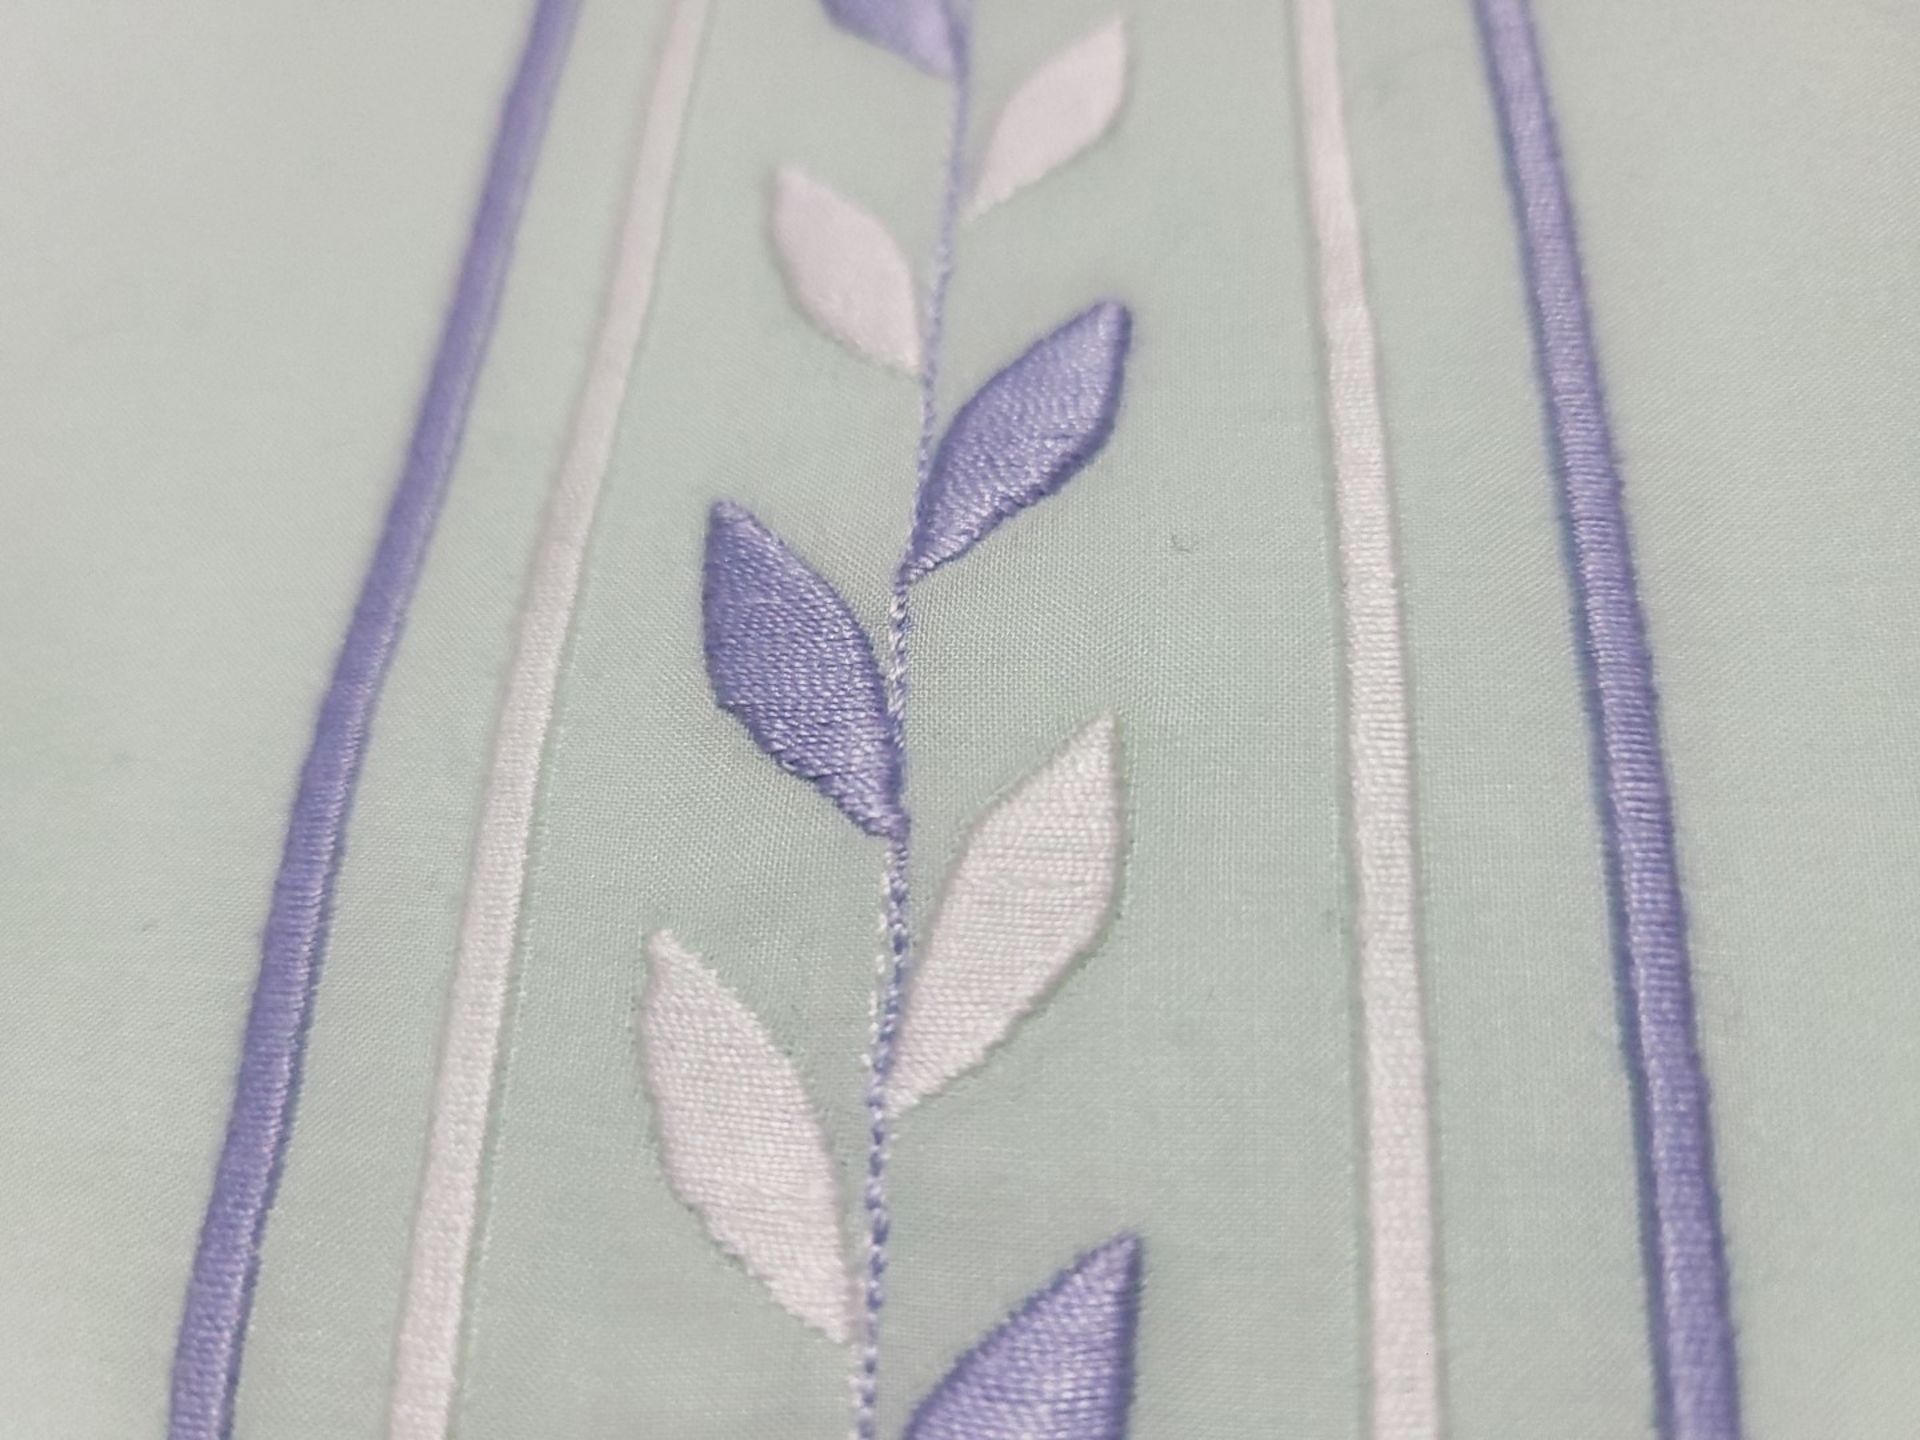 Set of 2 x PRATESI 'Impero' Blue & White Embroidered & Hem Stitched Teal Pillow Shams - Image 2 of 4